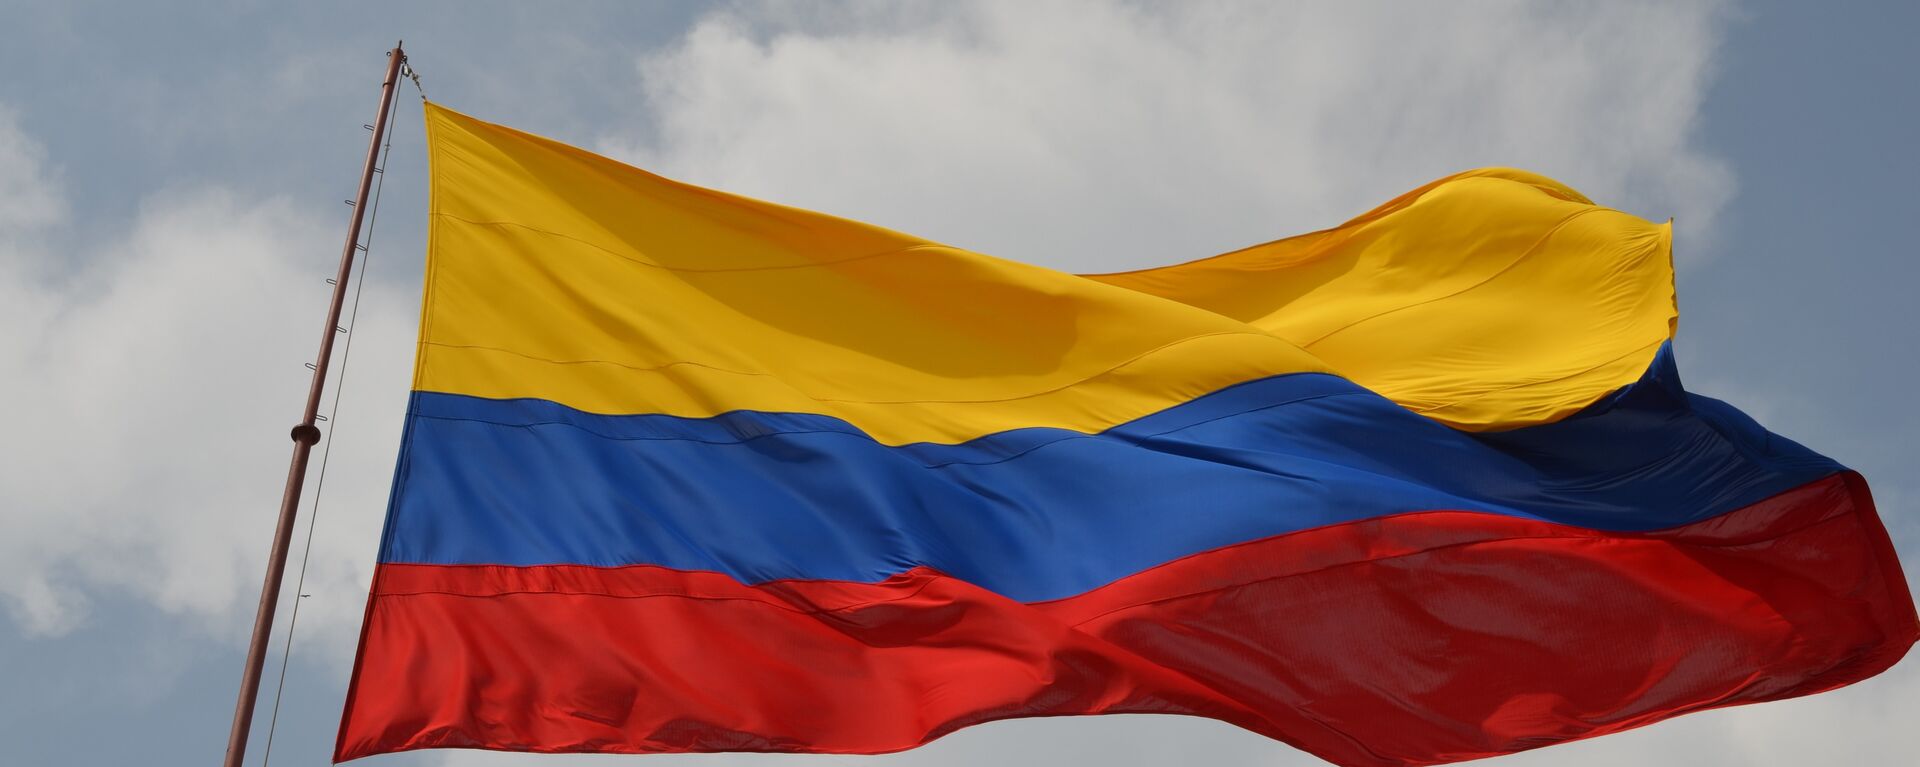 Bandera de Colombia - Sputnik Mundo, 1920, 15.12.2021